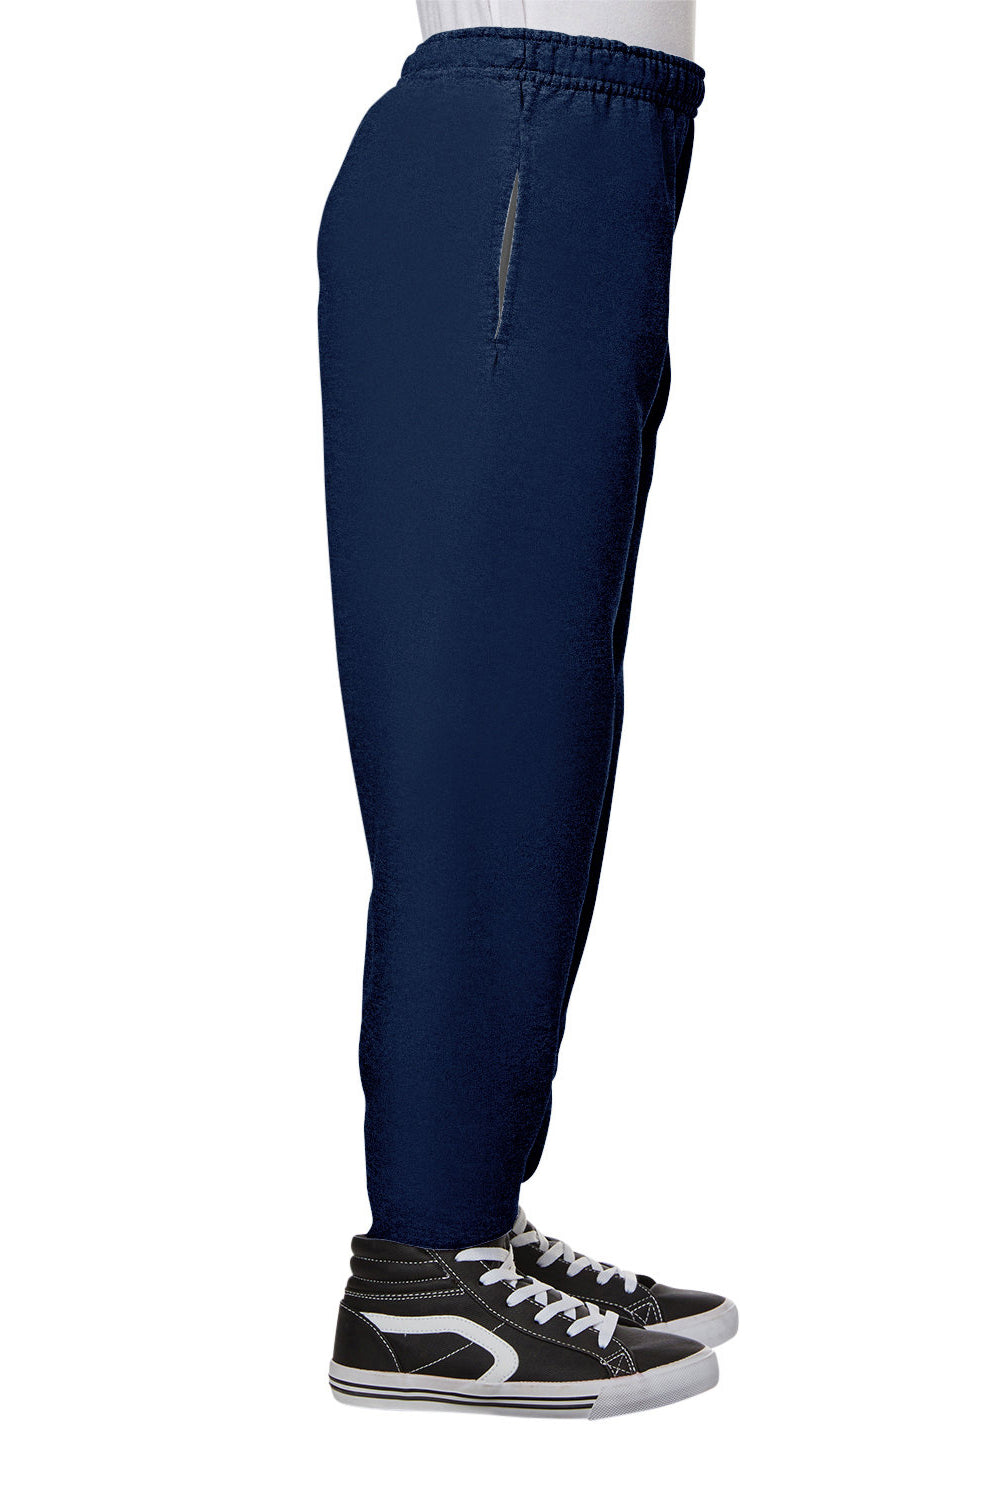 Jerzees 975YR Youth NuBlend Fleece Jogger Sweatpants w/ Pockets Navy Blue Side